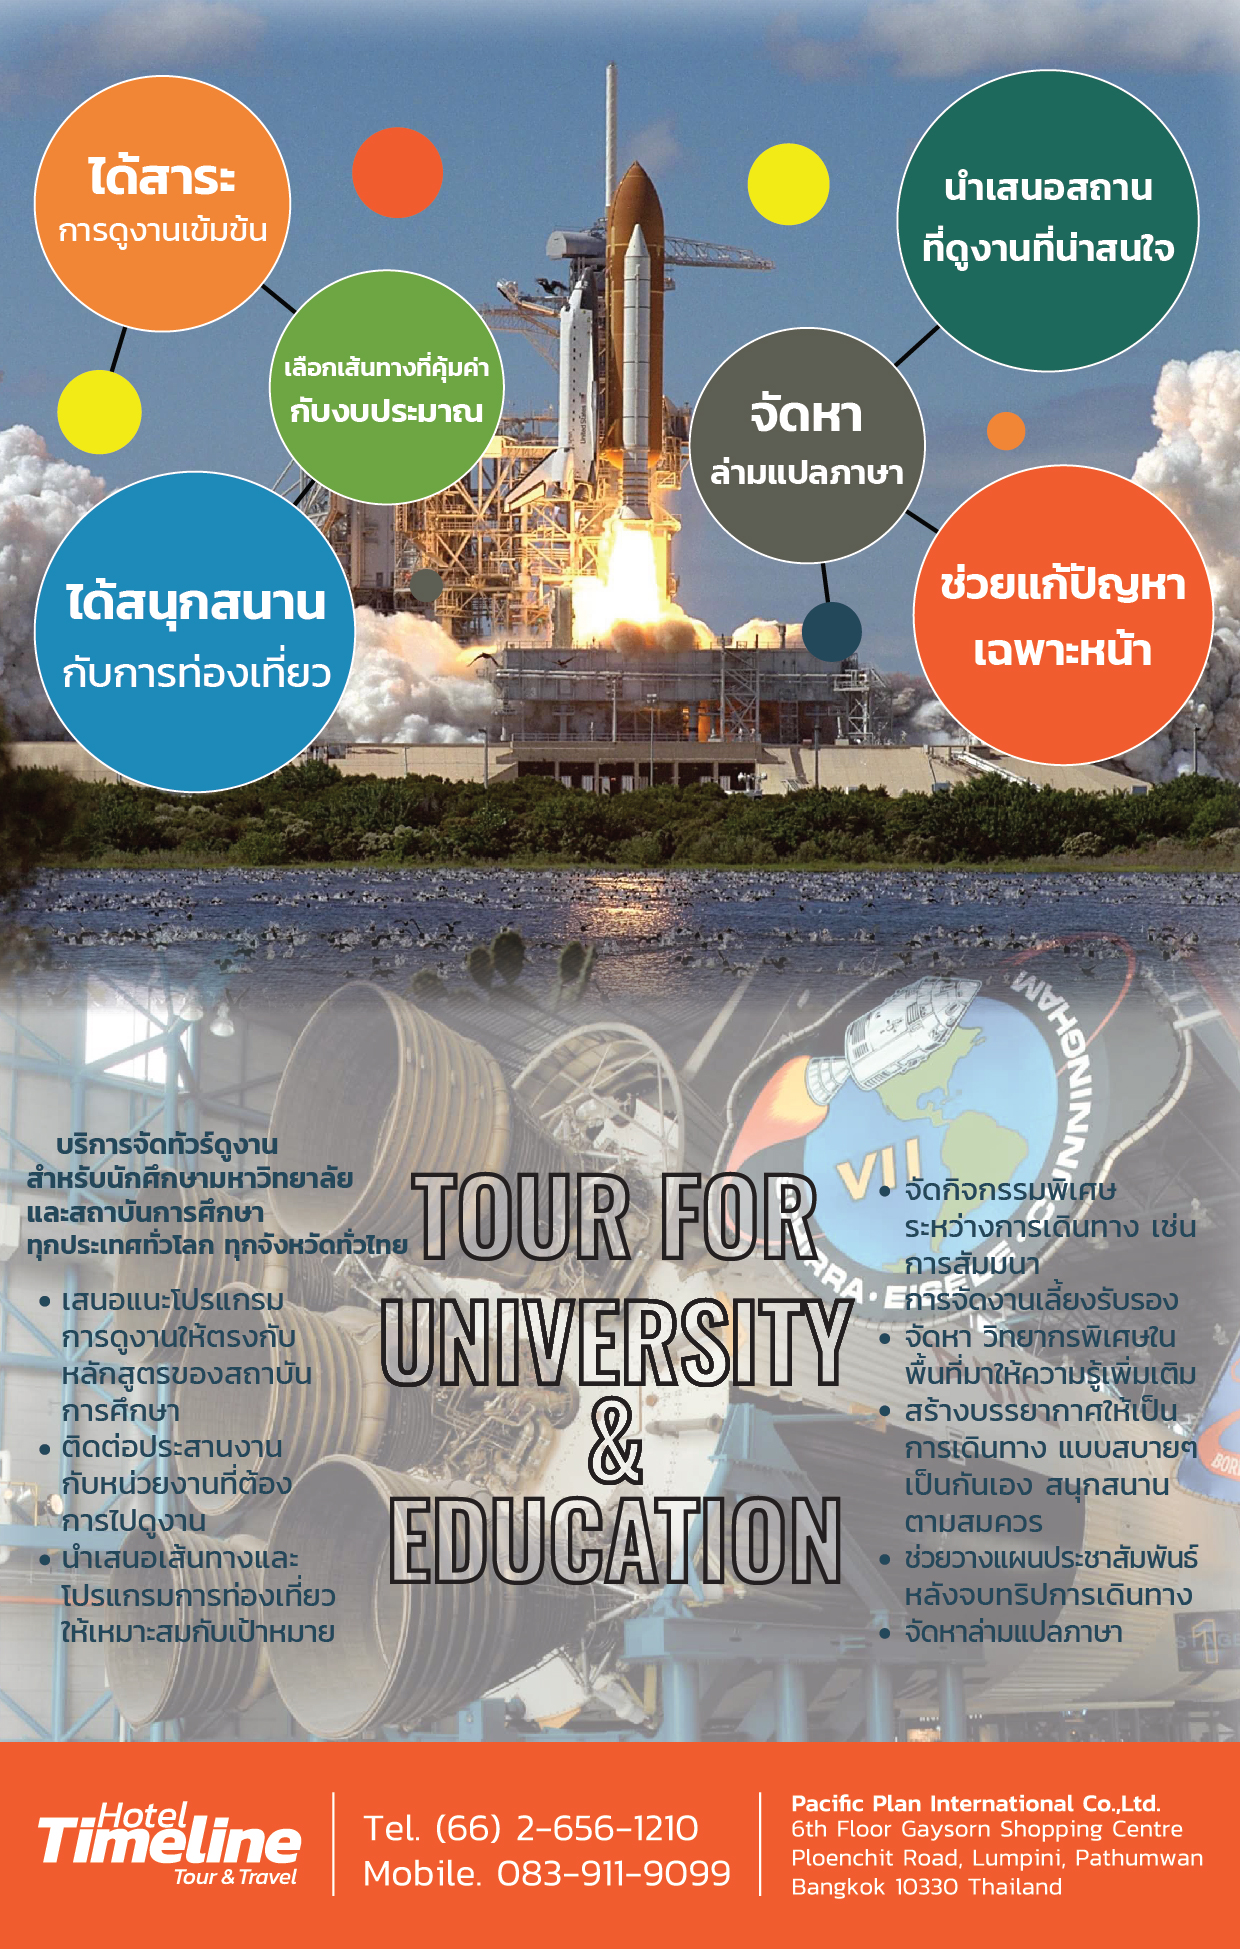 Tour for University & Education